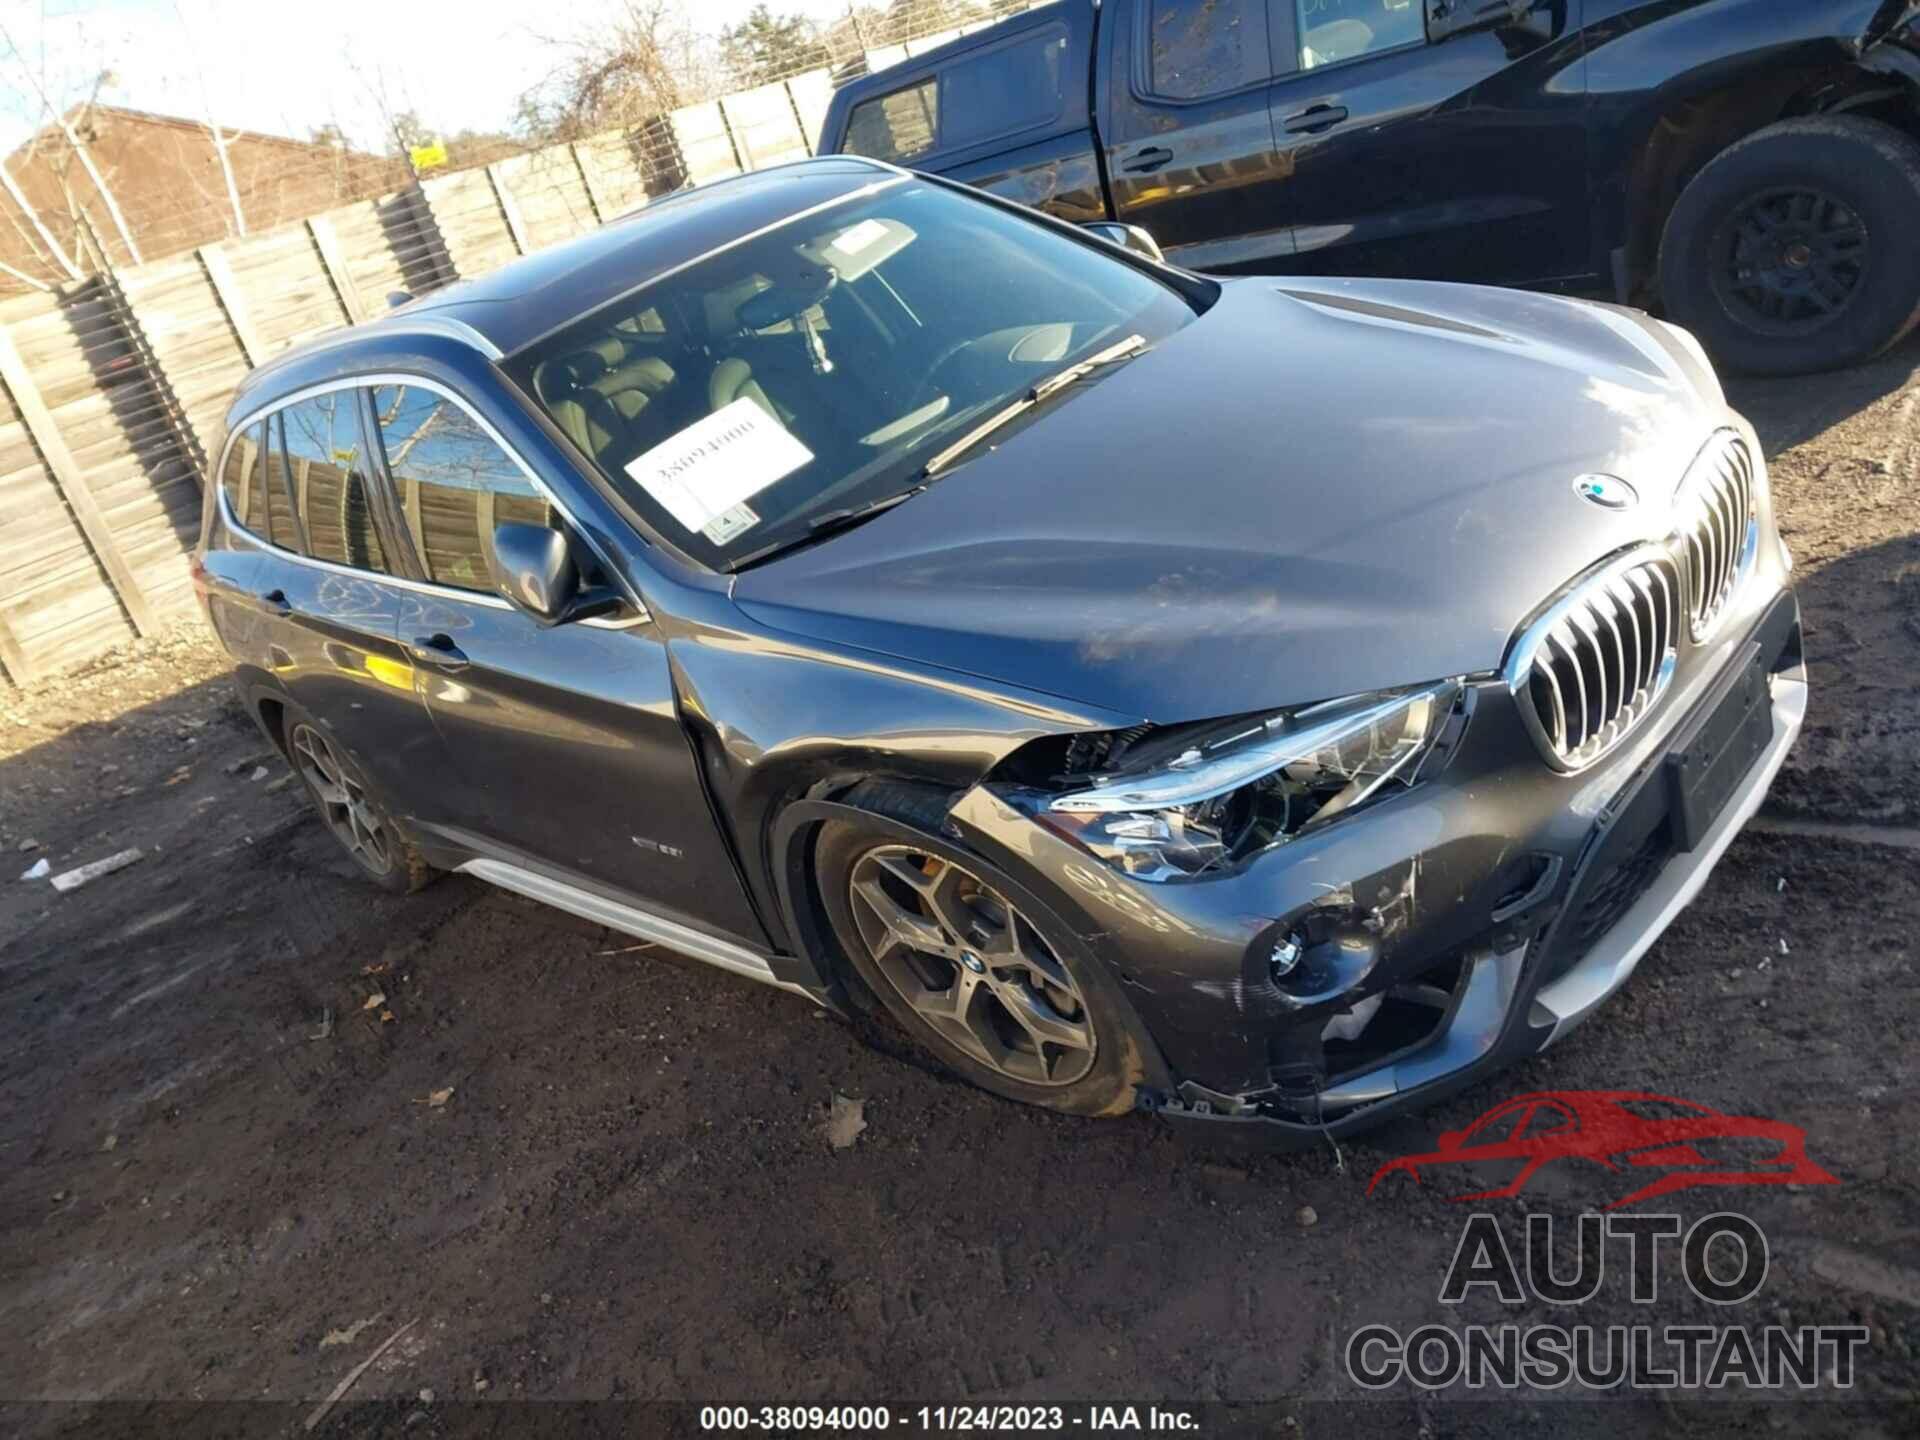 BMW X1 2017 - WBXHT3C35H5F85146